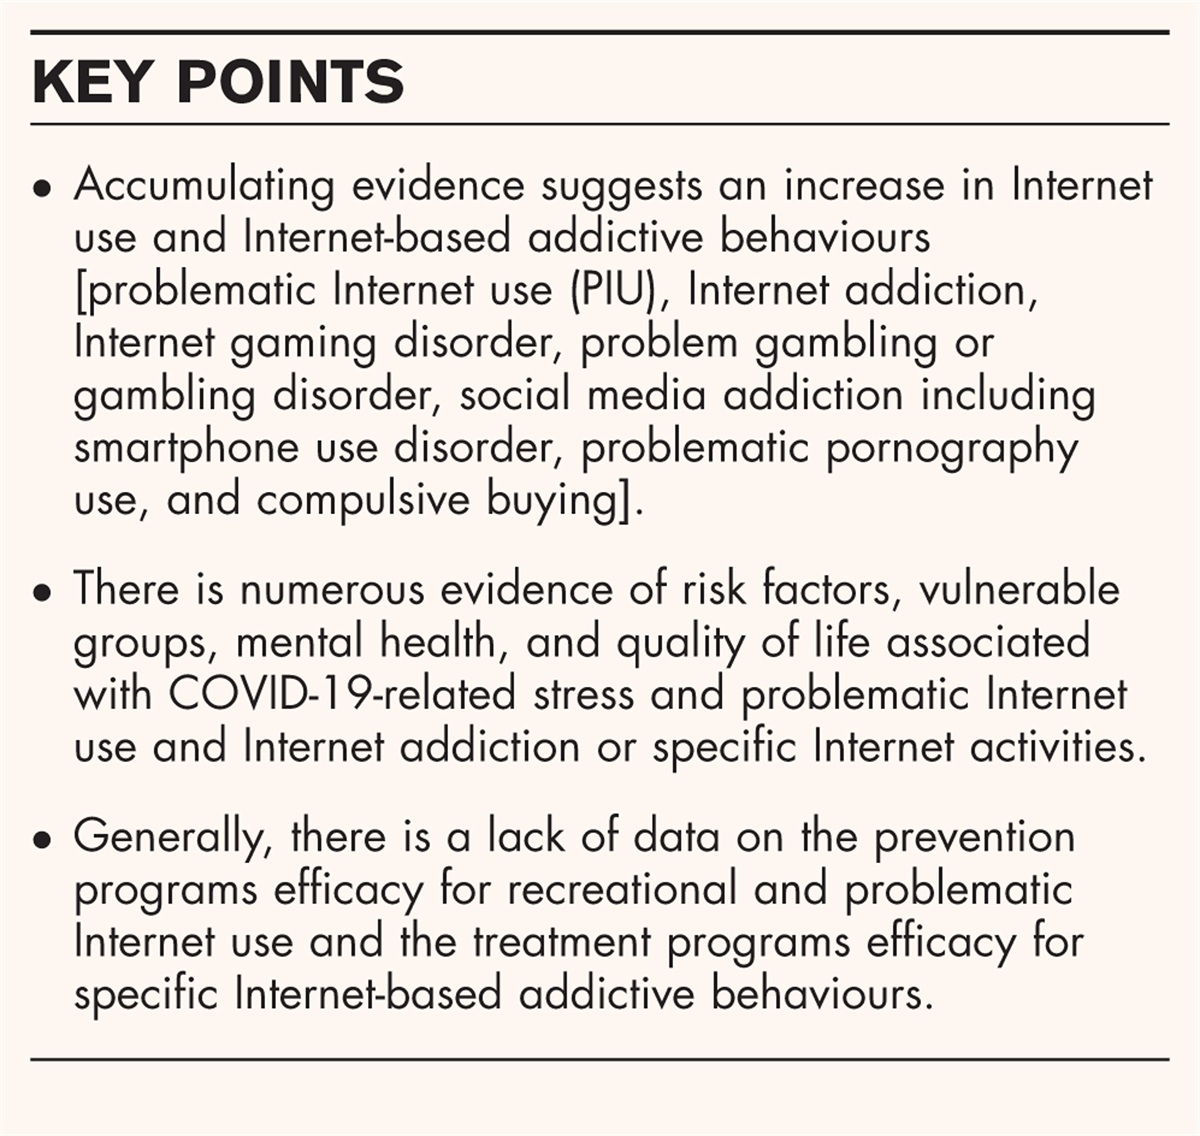 Internet use and internet-based addictive behaviours during coronavirus pandemic